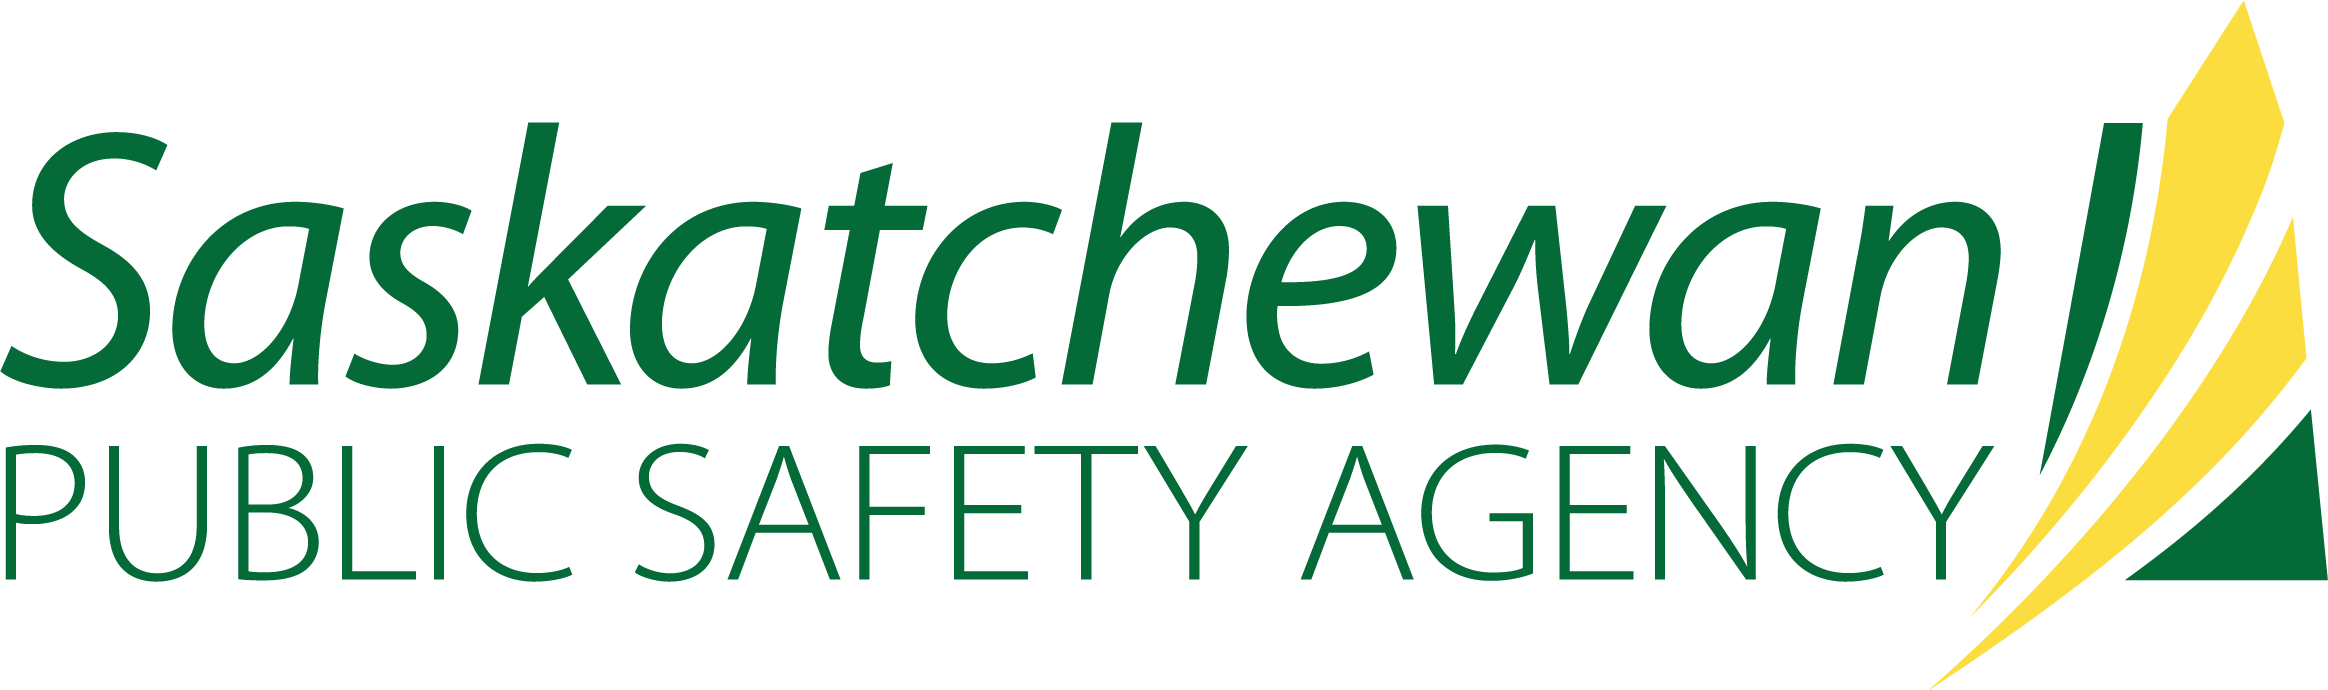 Government of Saskatchewan - Saskatchewan Public Safety Agency